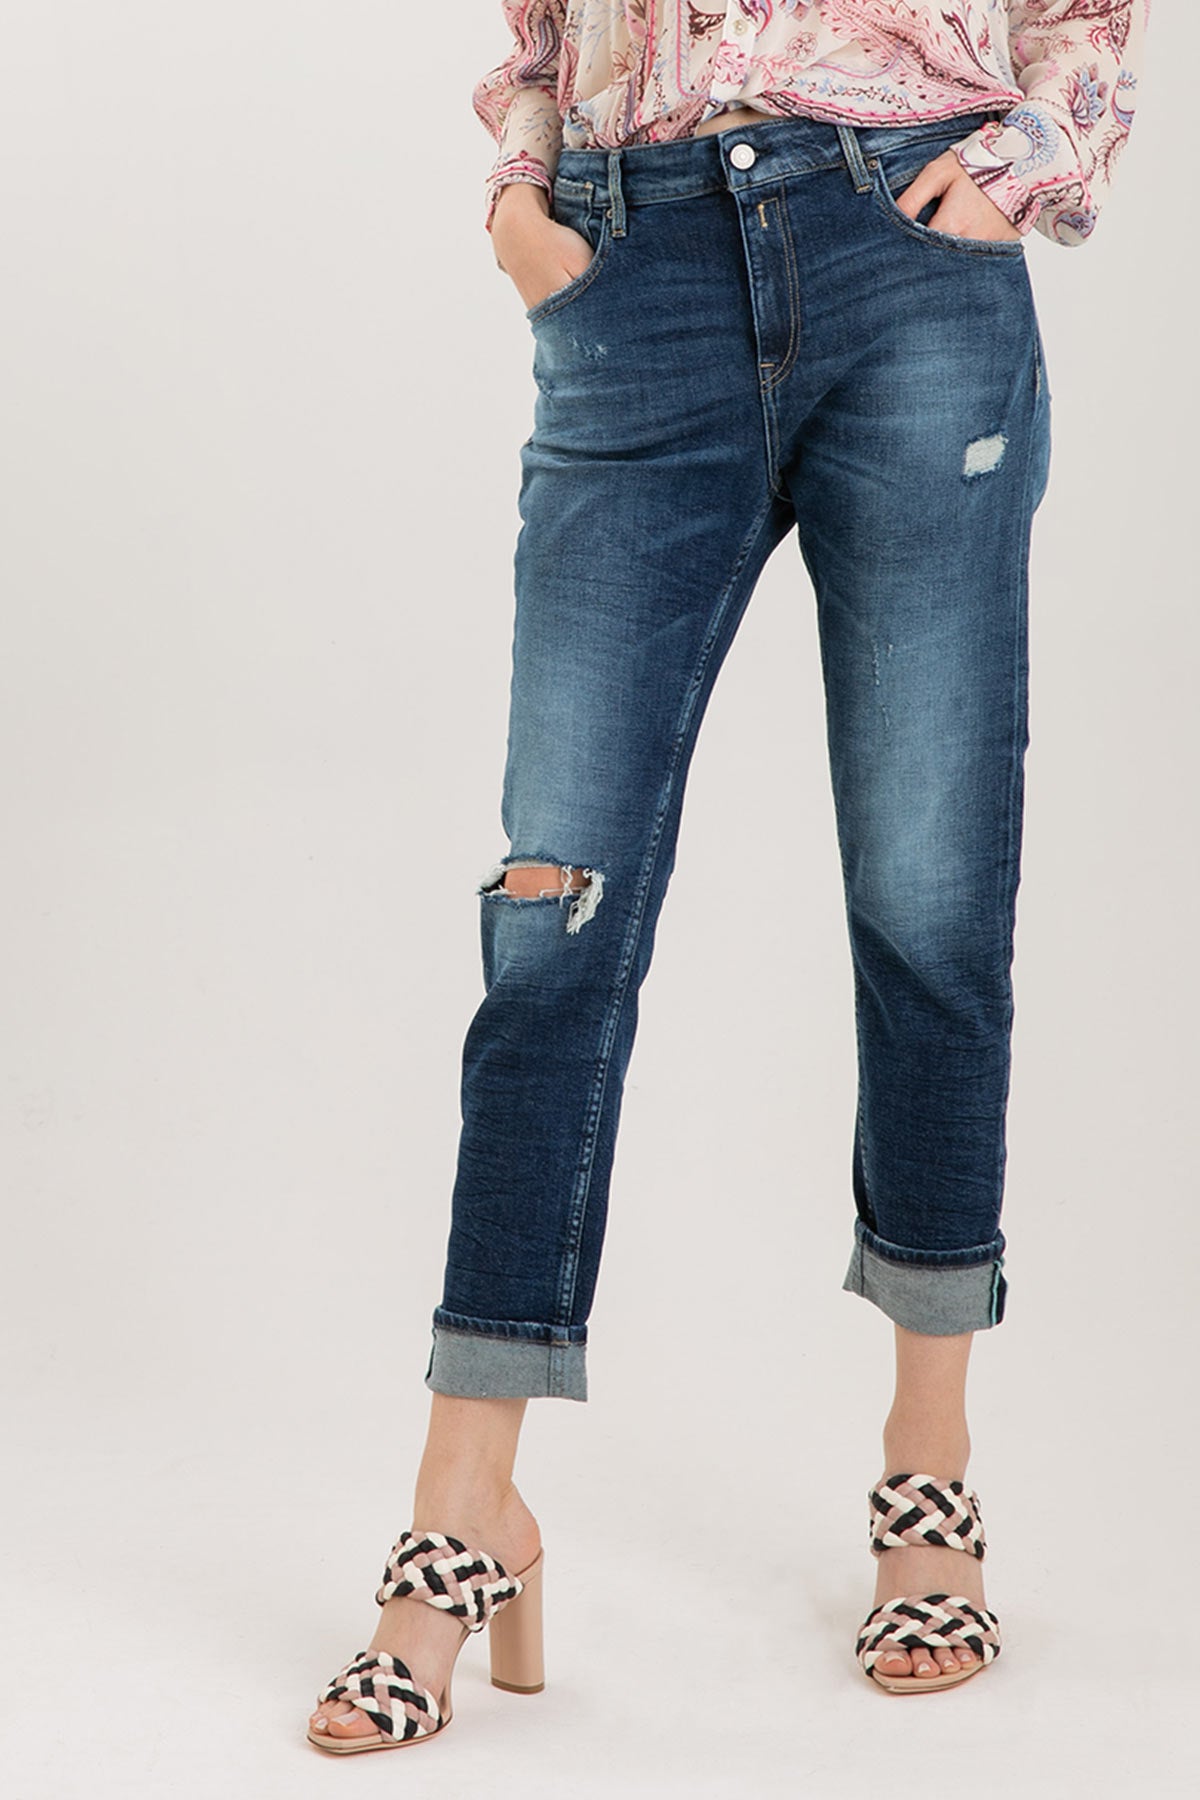 Replay Marty Slim Boyfriend Jeans-Libas Trendy Fashion Store